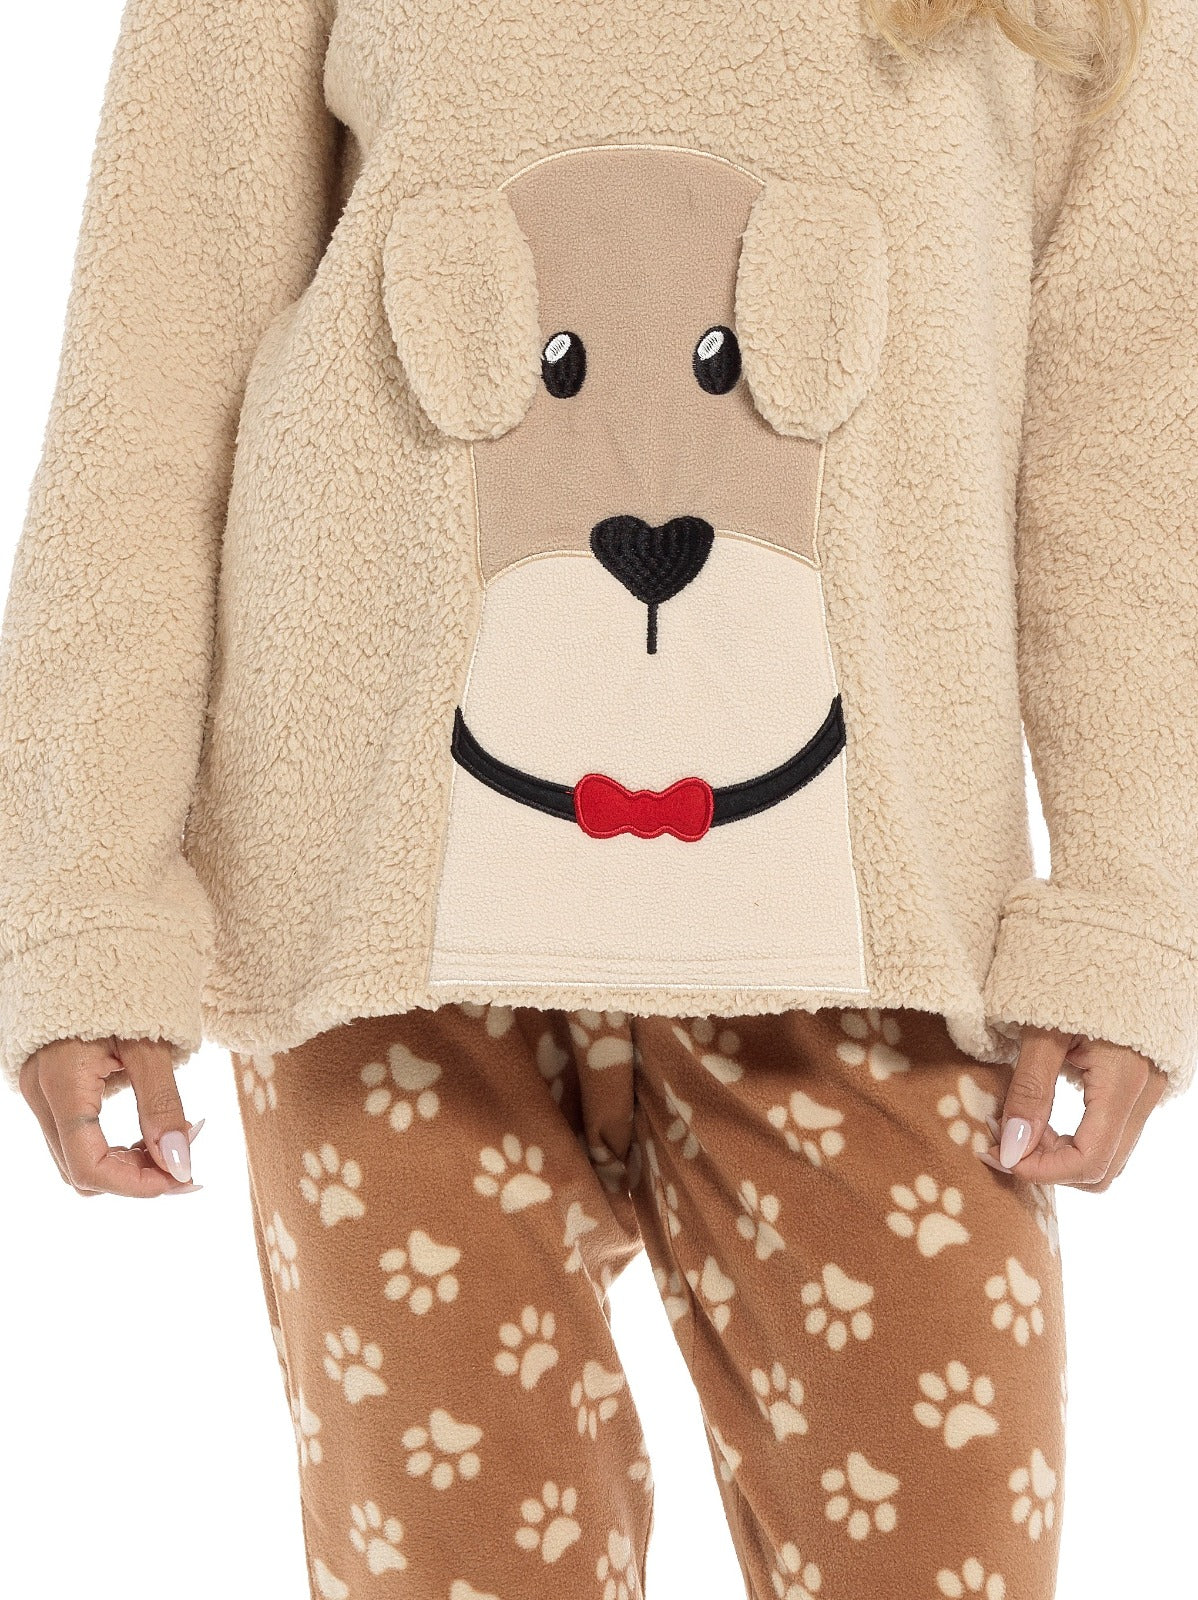 Women's Dog Snuggle Fleece Ladies Pyjama Set. Buy now for £20.00. A Pyjamas by Daisy Dreamer. 12-14, 16-18, 18-20, 20-22, beige, brown, clothing, daisy dreamer, dog, dogs, embroidery, extra large, Fleece Pyjama, girls, gym, ladies, large, long sleeve, lou